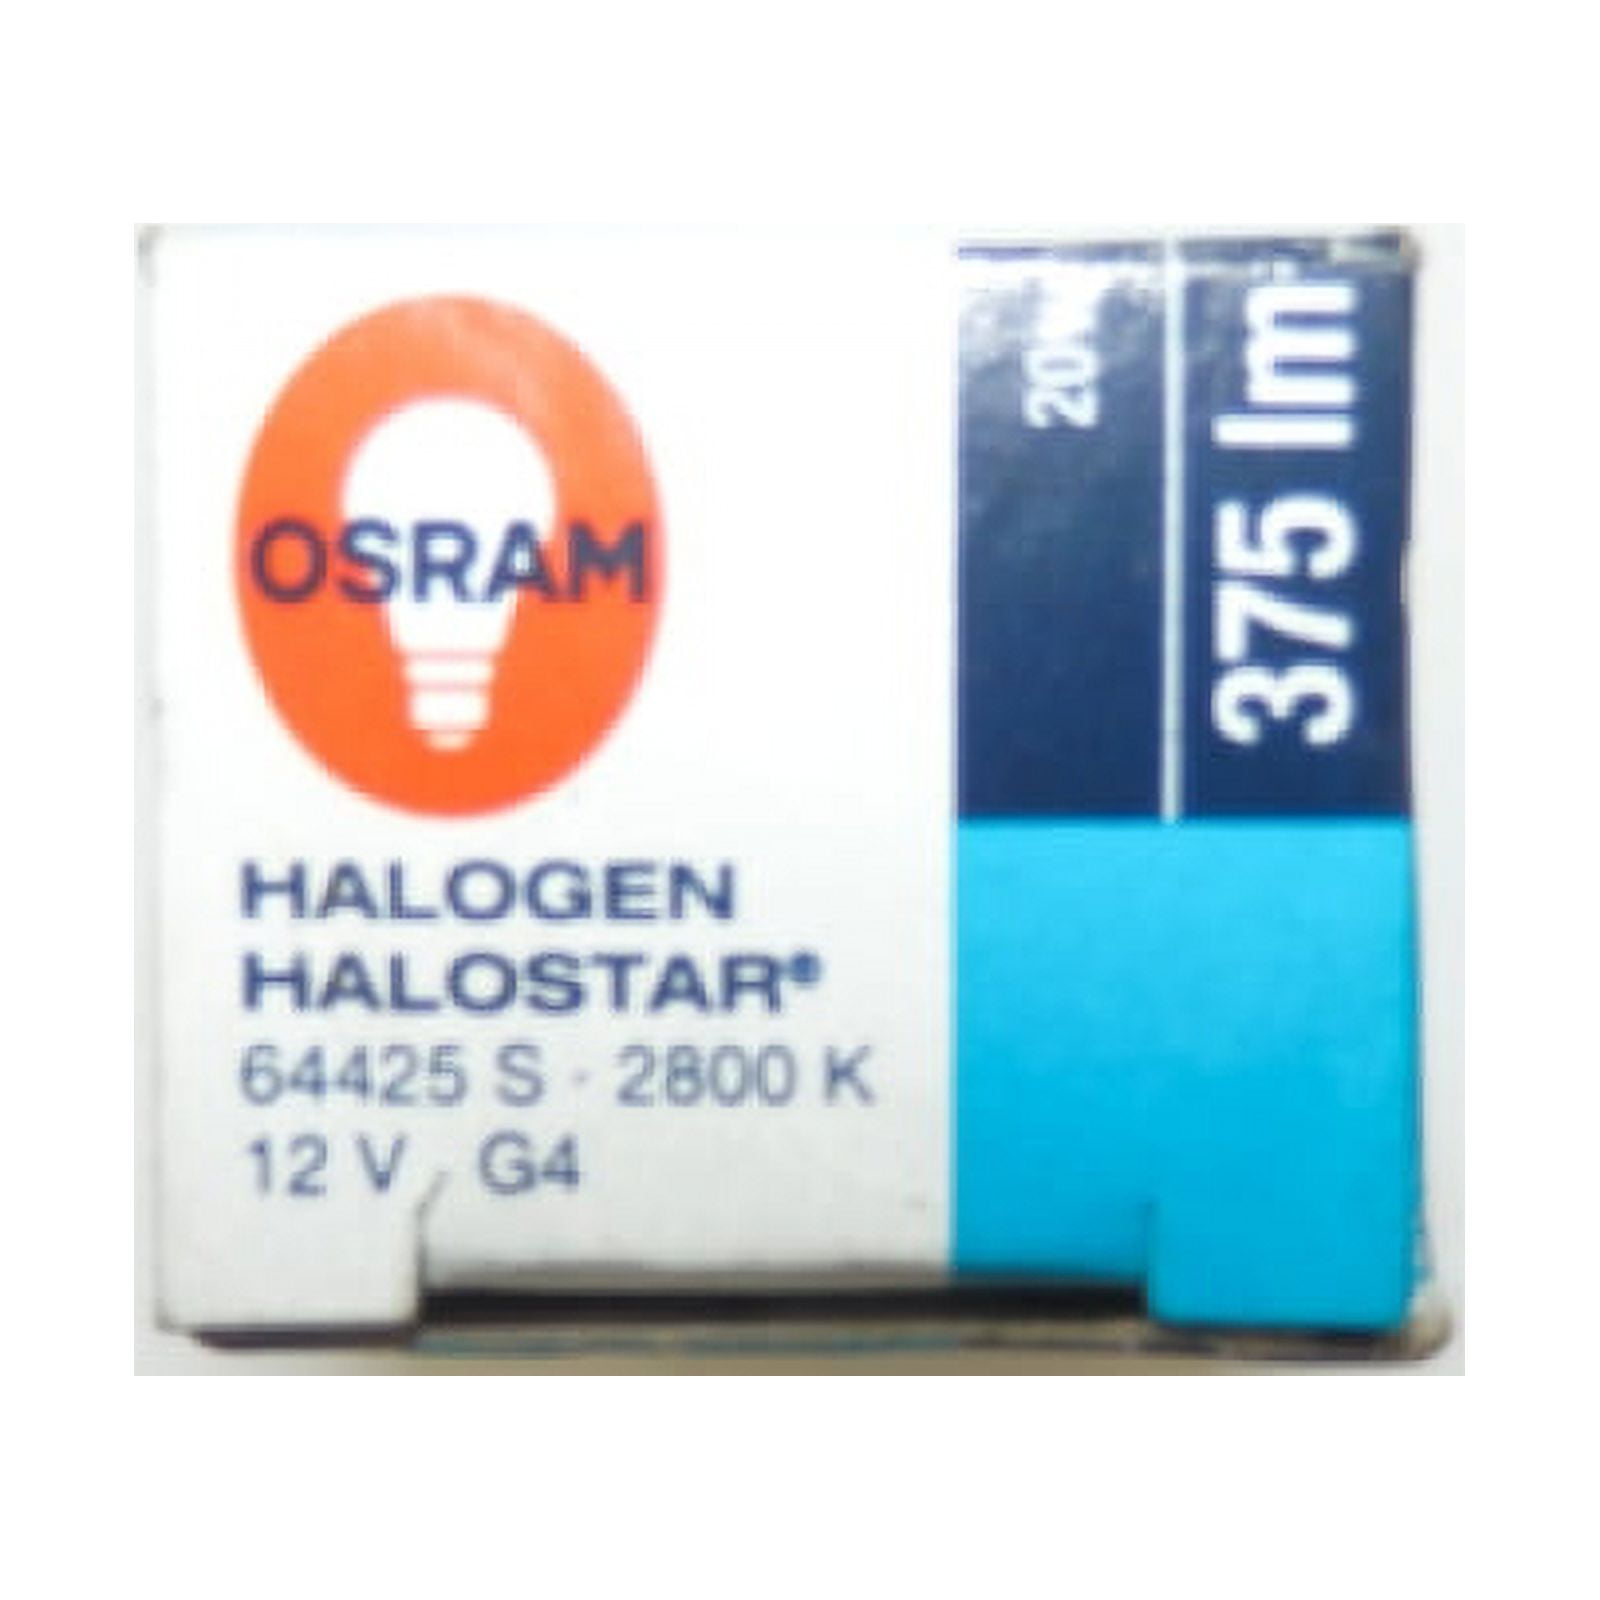 OSRAM - 64425 - Halogen Bulb 20 Watt 22 kWh/1000h, 12 Volt G4, 33 x 10 mm